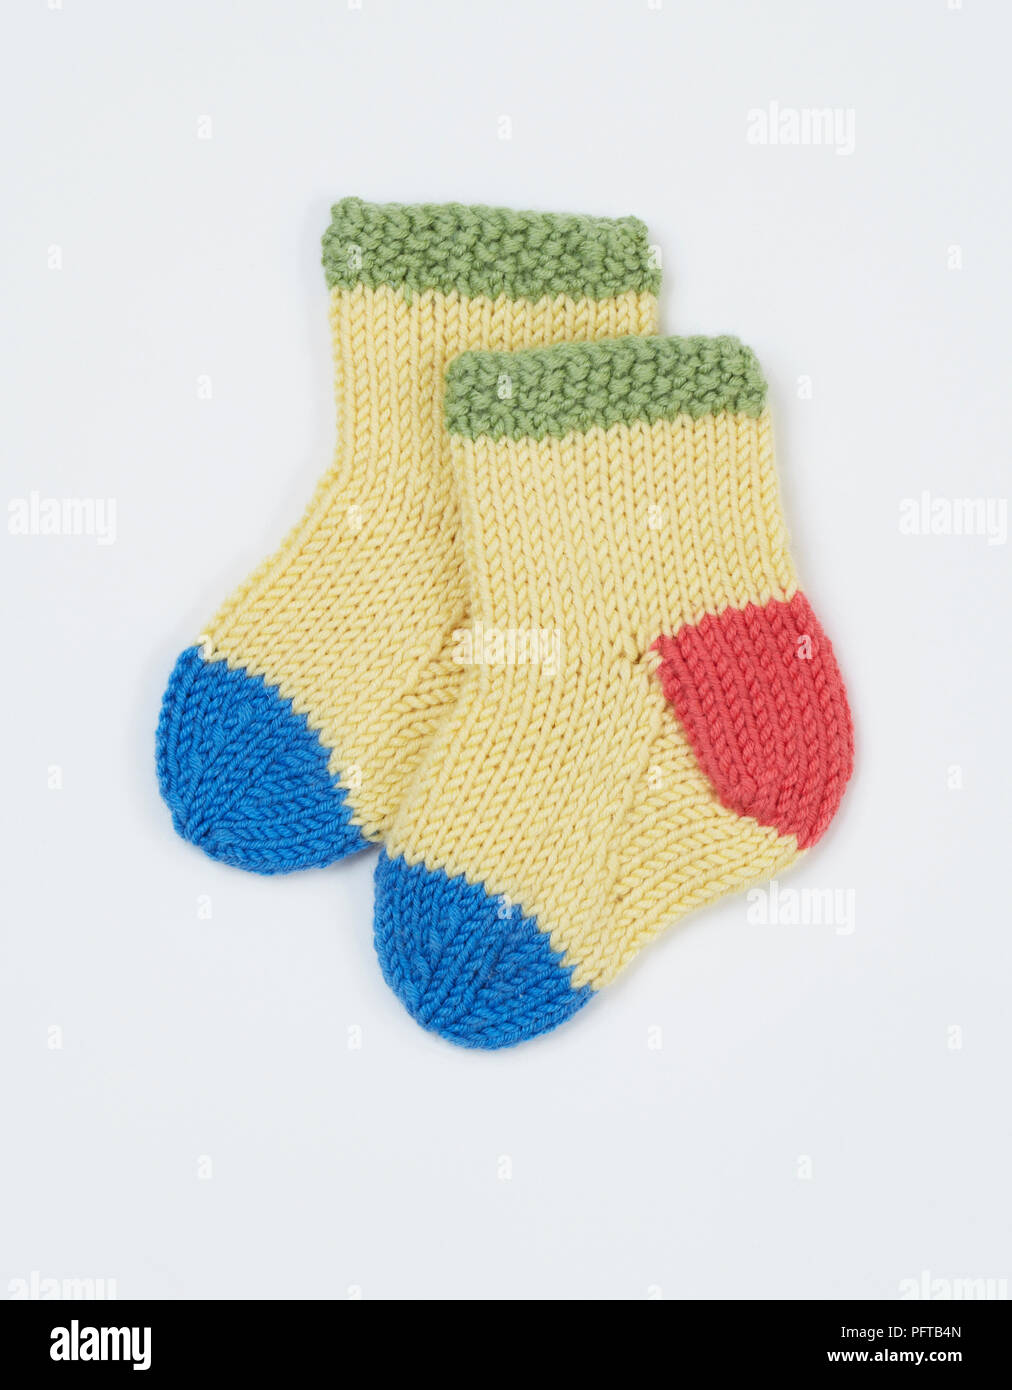 Knitted yellow child's socks Stock Photo